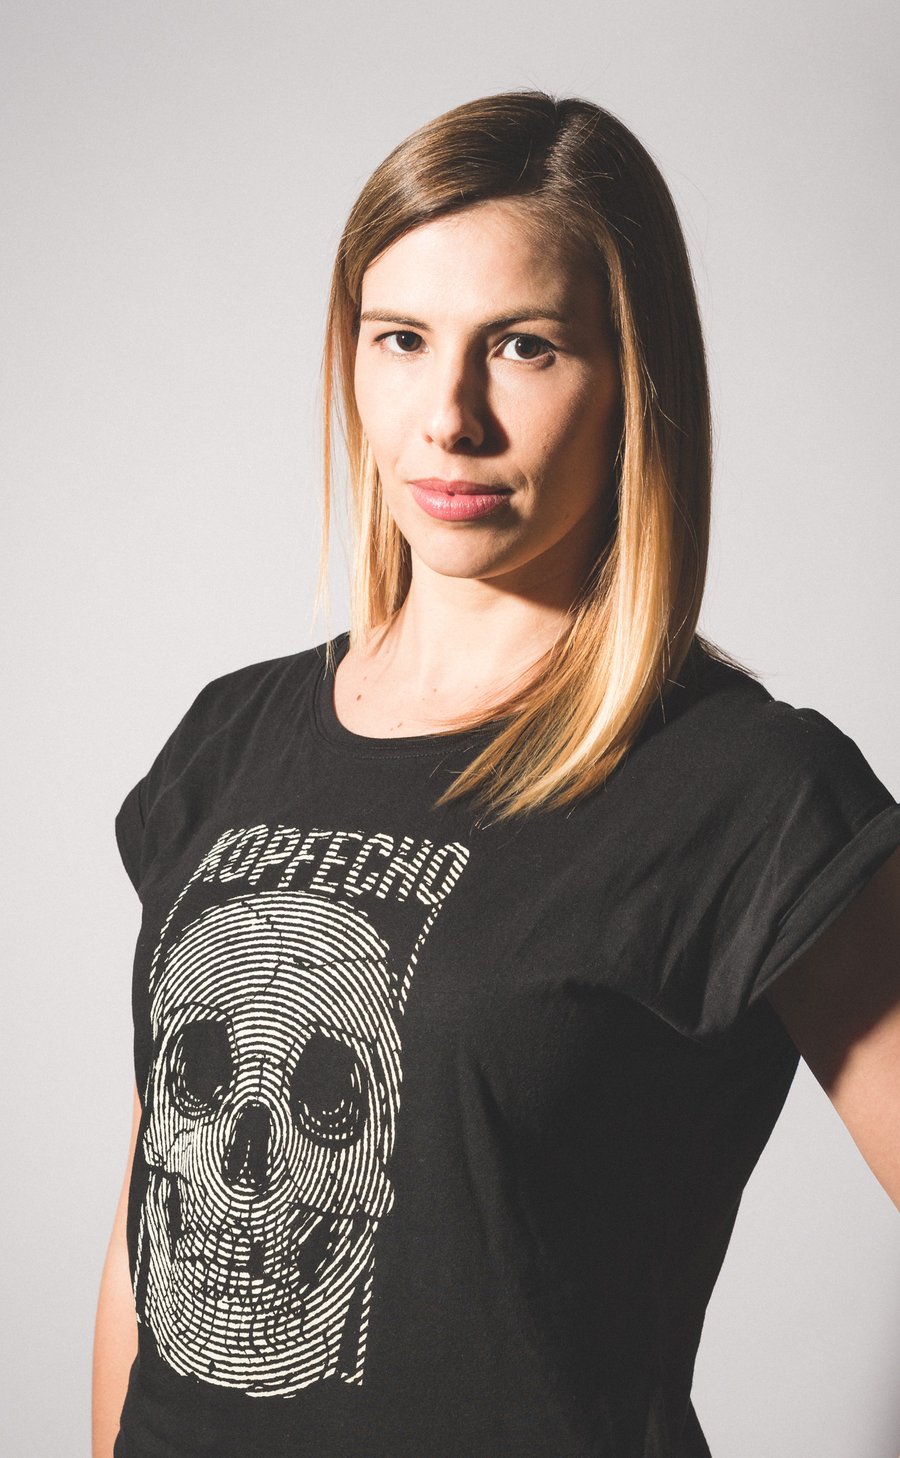 Image of T-Shirt - "TOTENKOPF" - Mädels